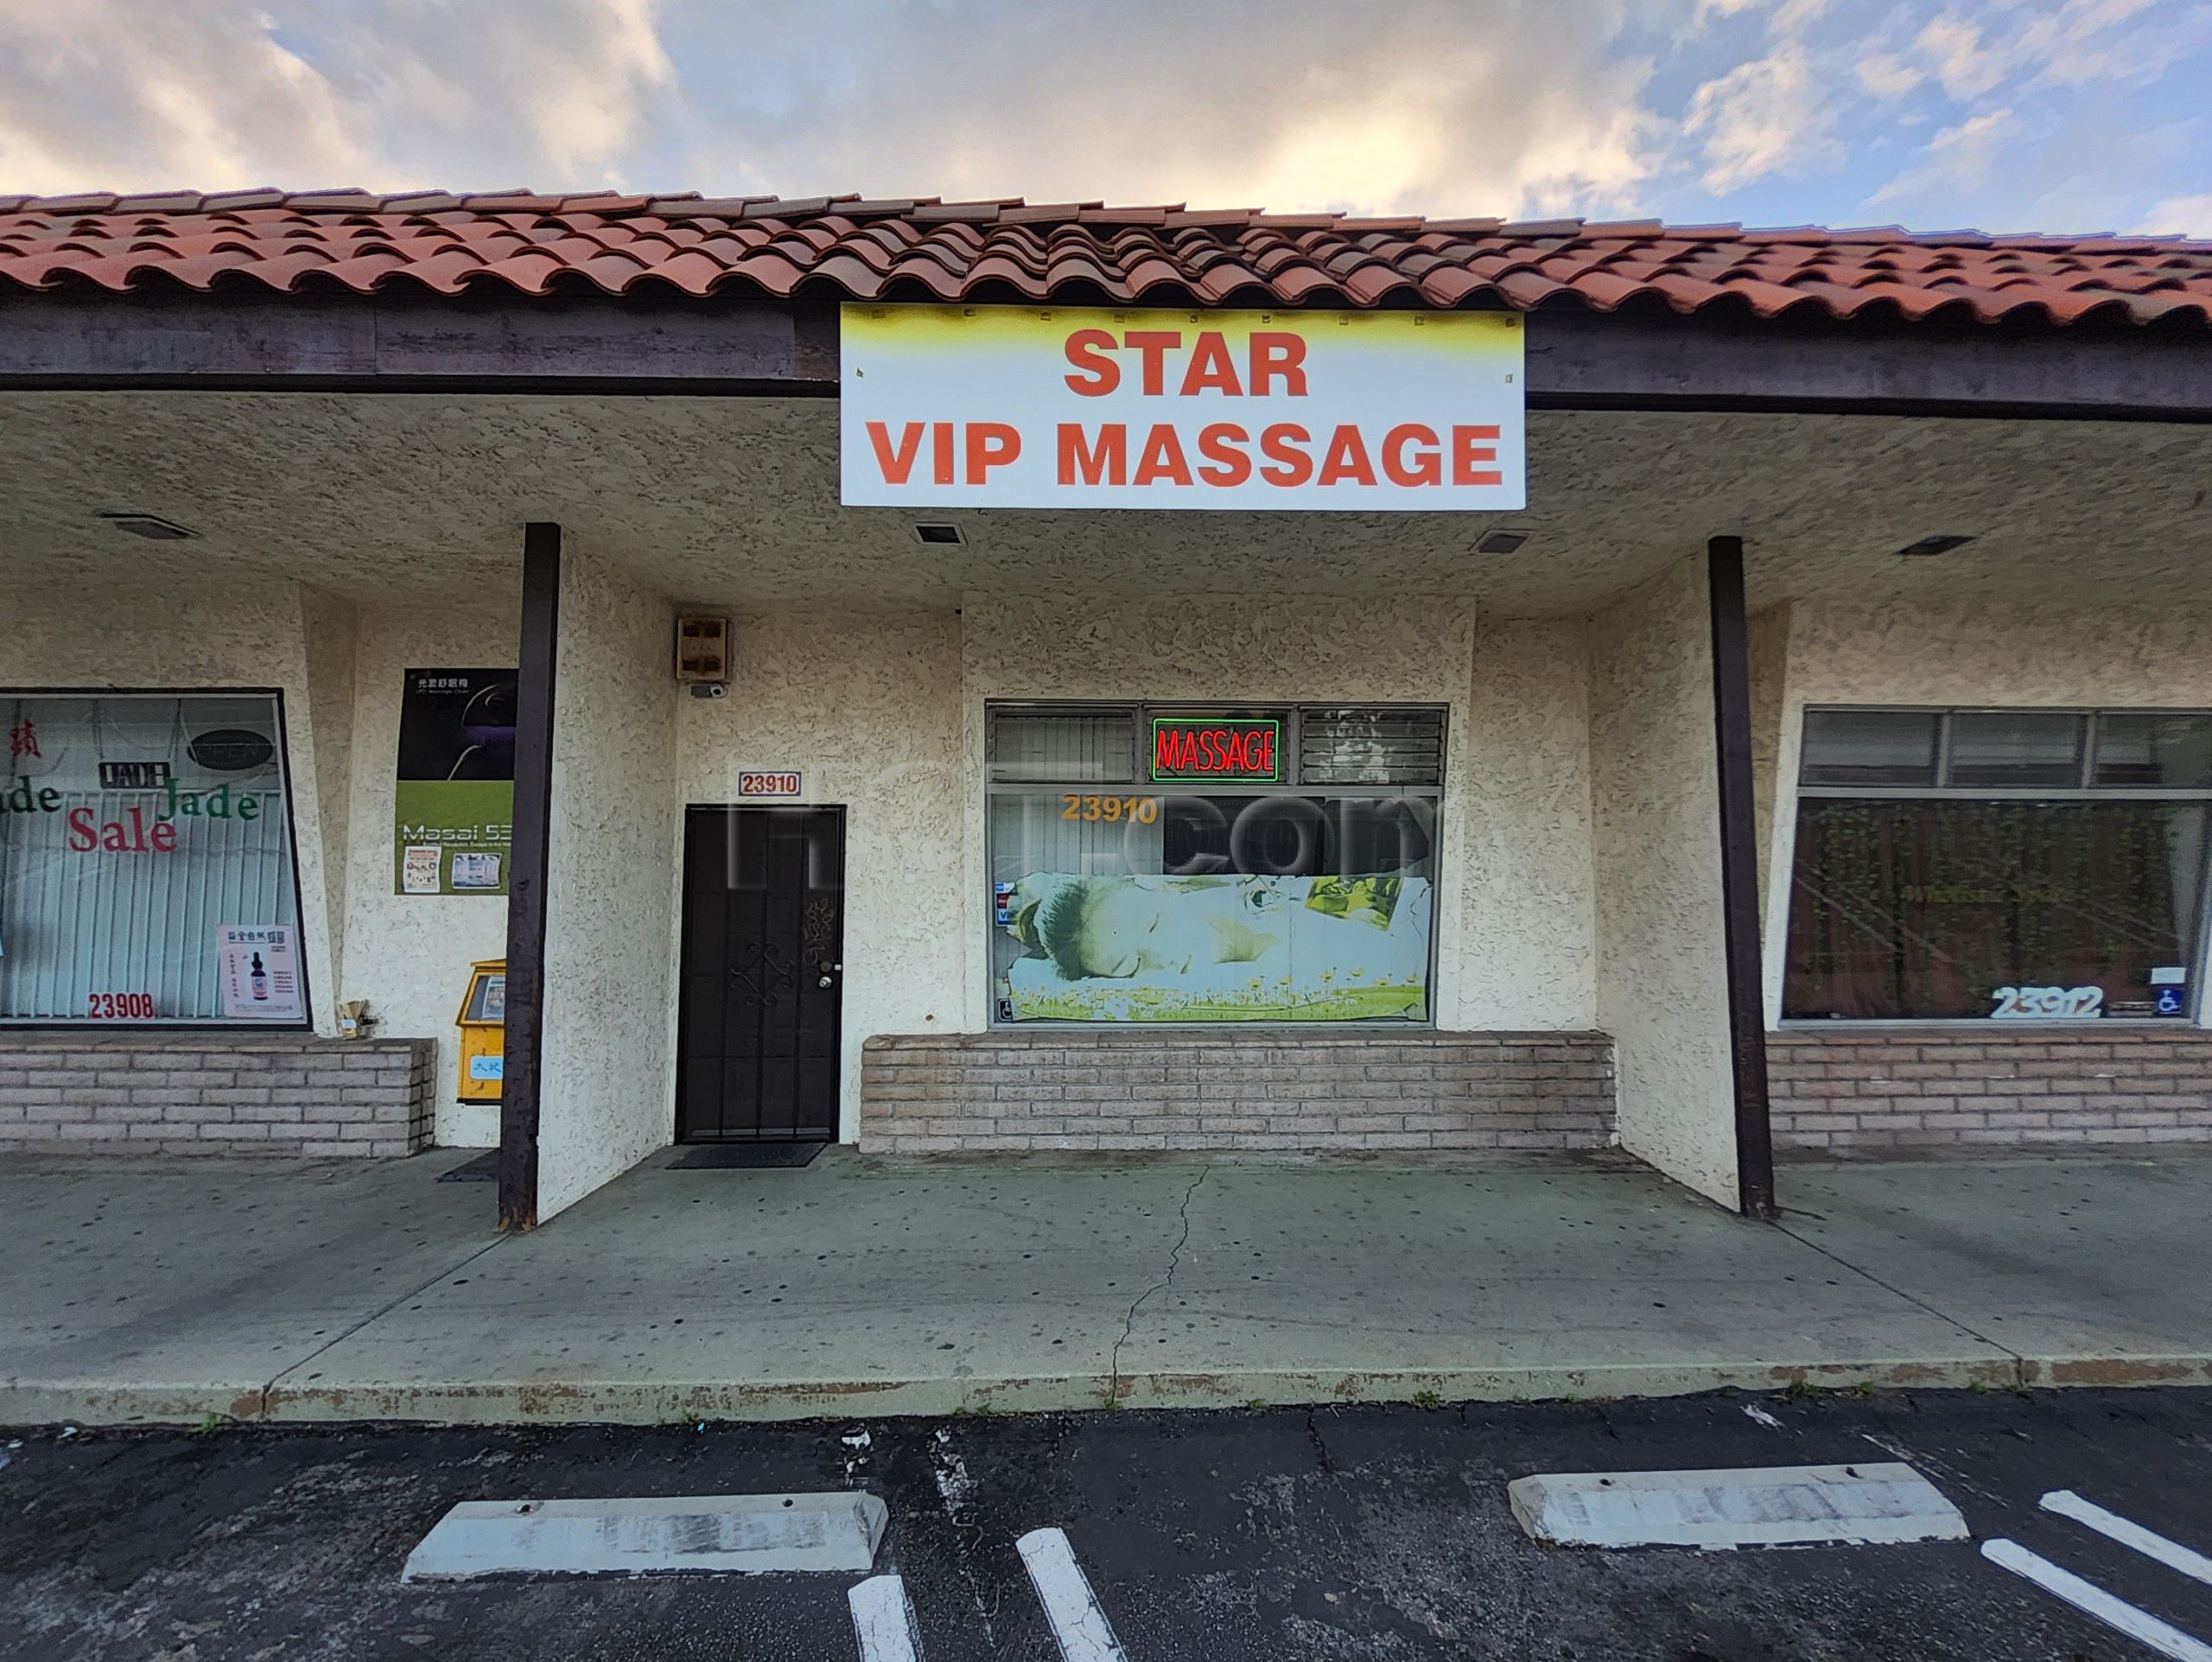 Torrance, California Star Vip Massage